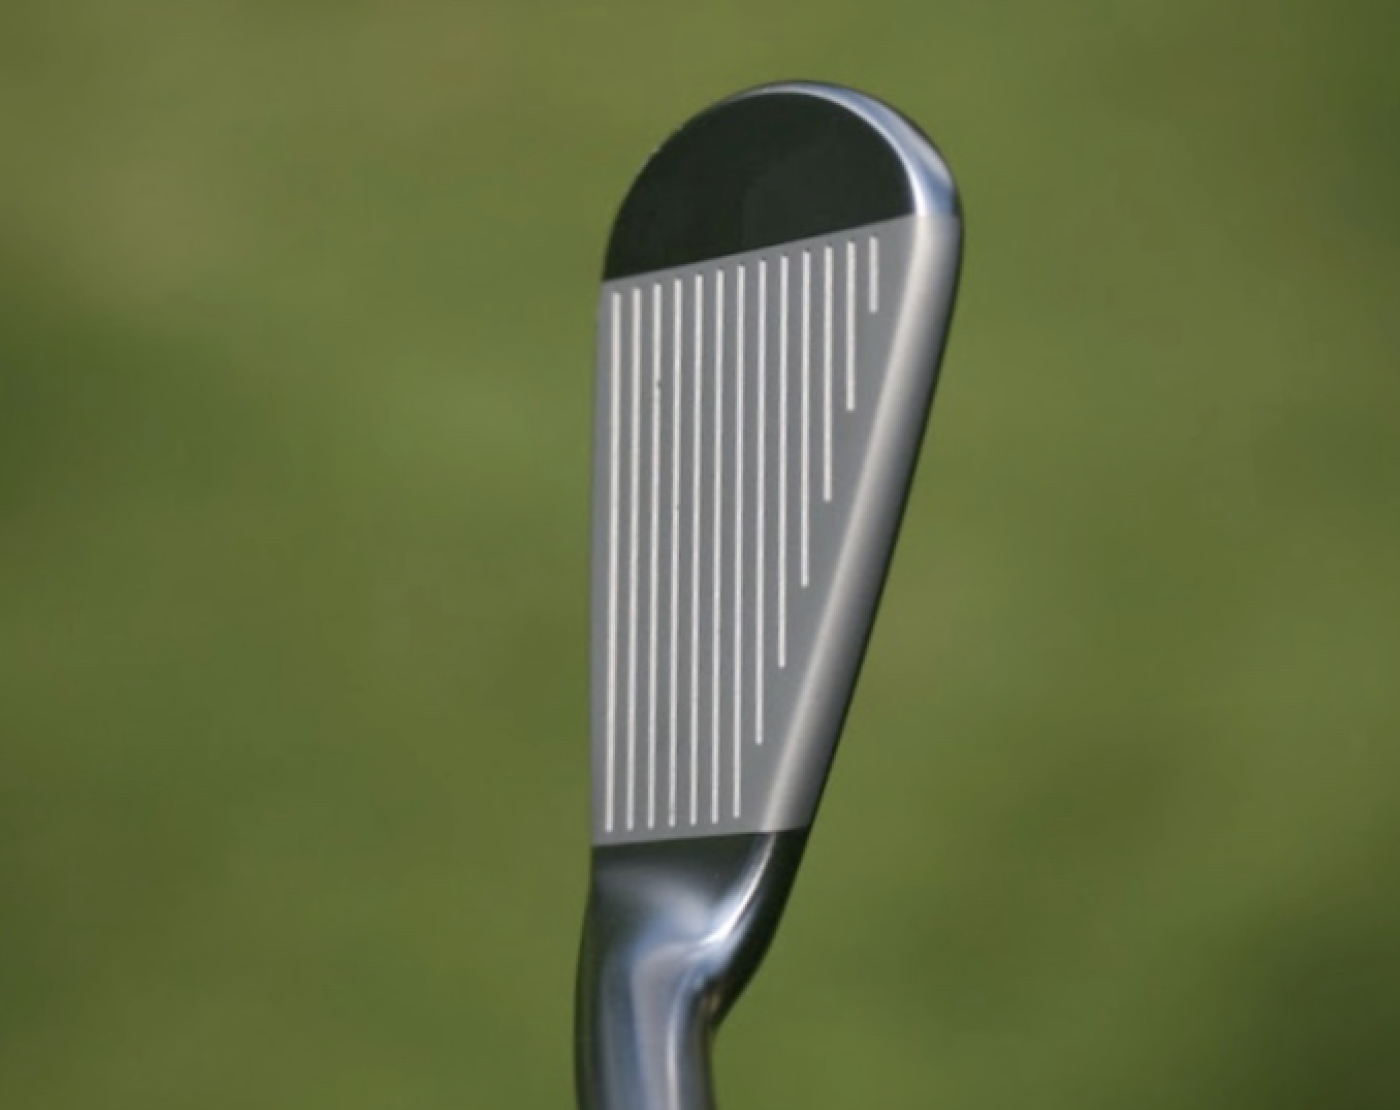 The Wedge Guy: Hard 8-iron or easy 7? (The SCor Method) – GolfWRX